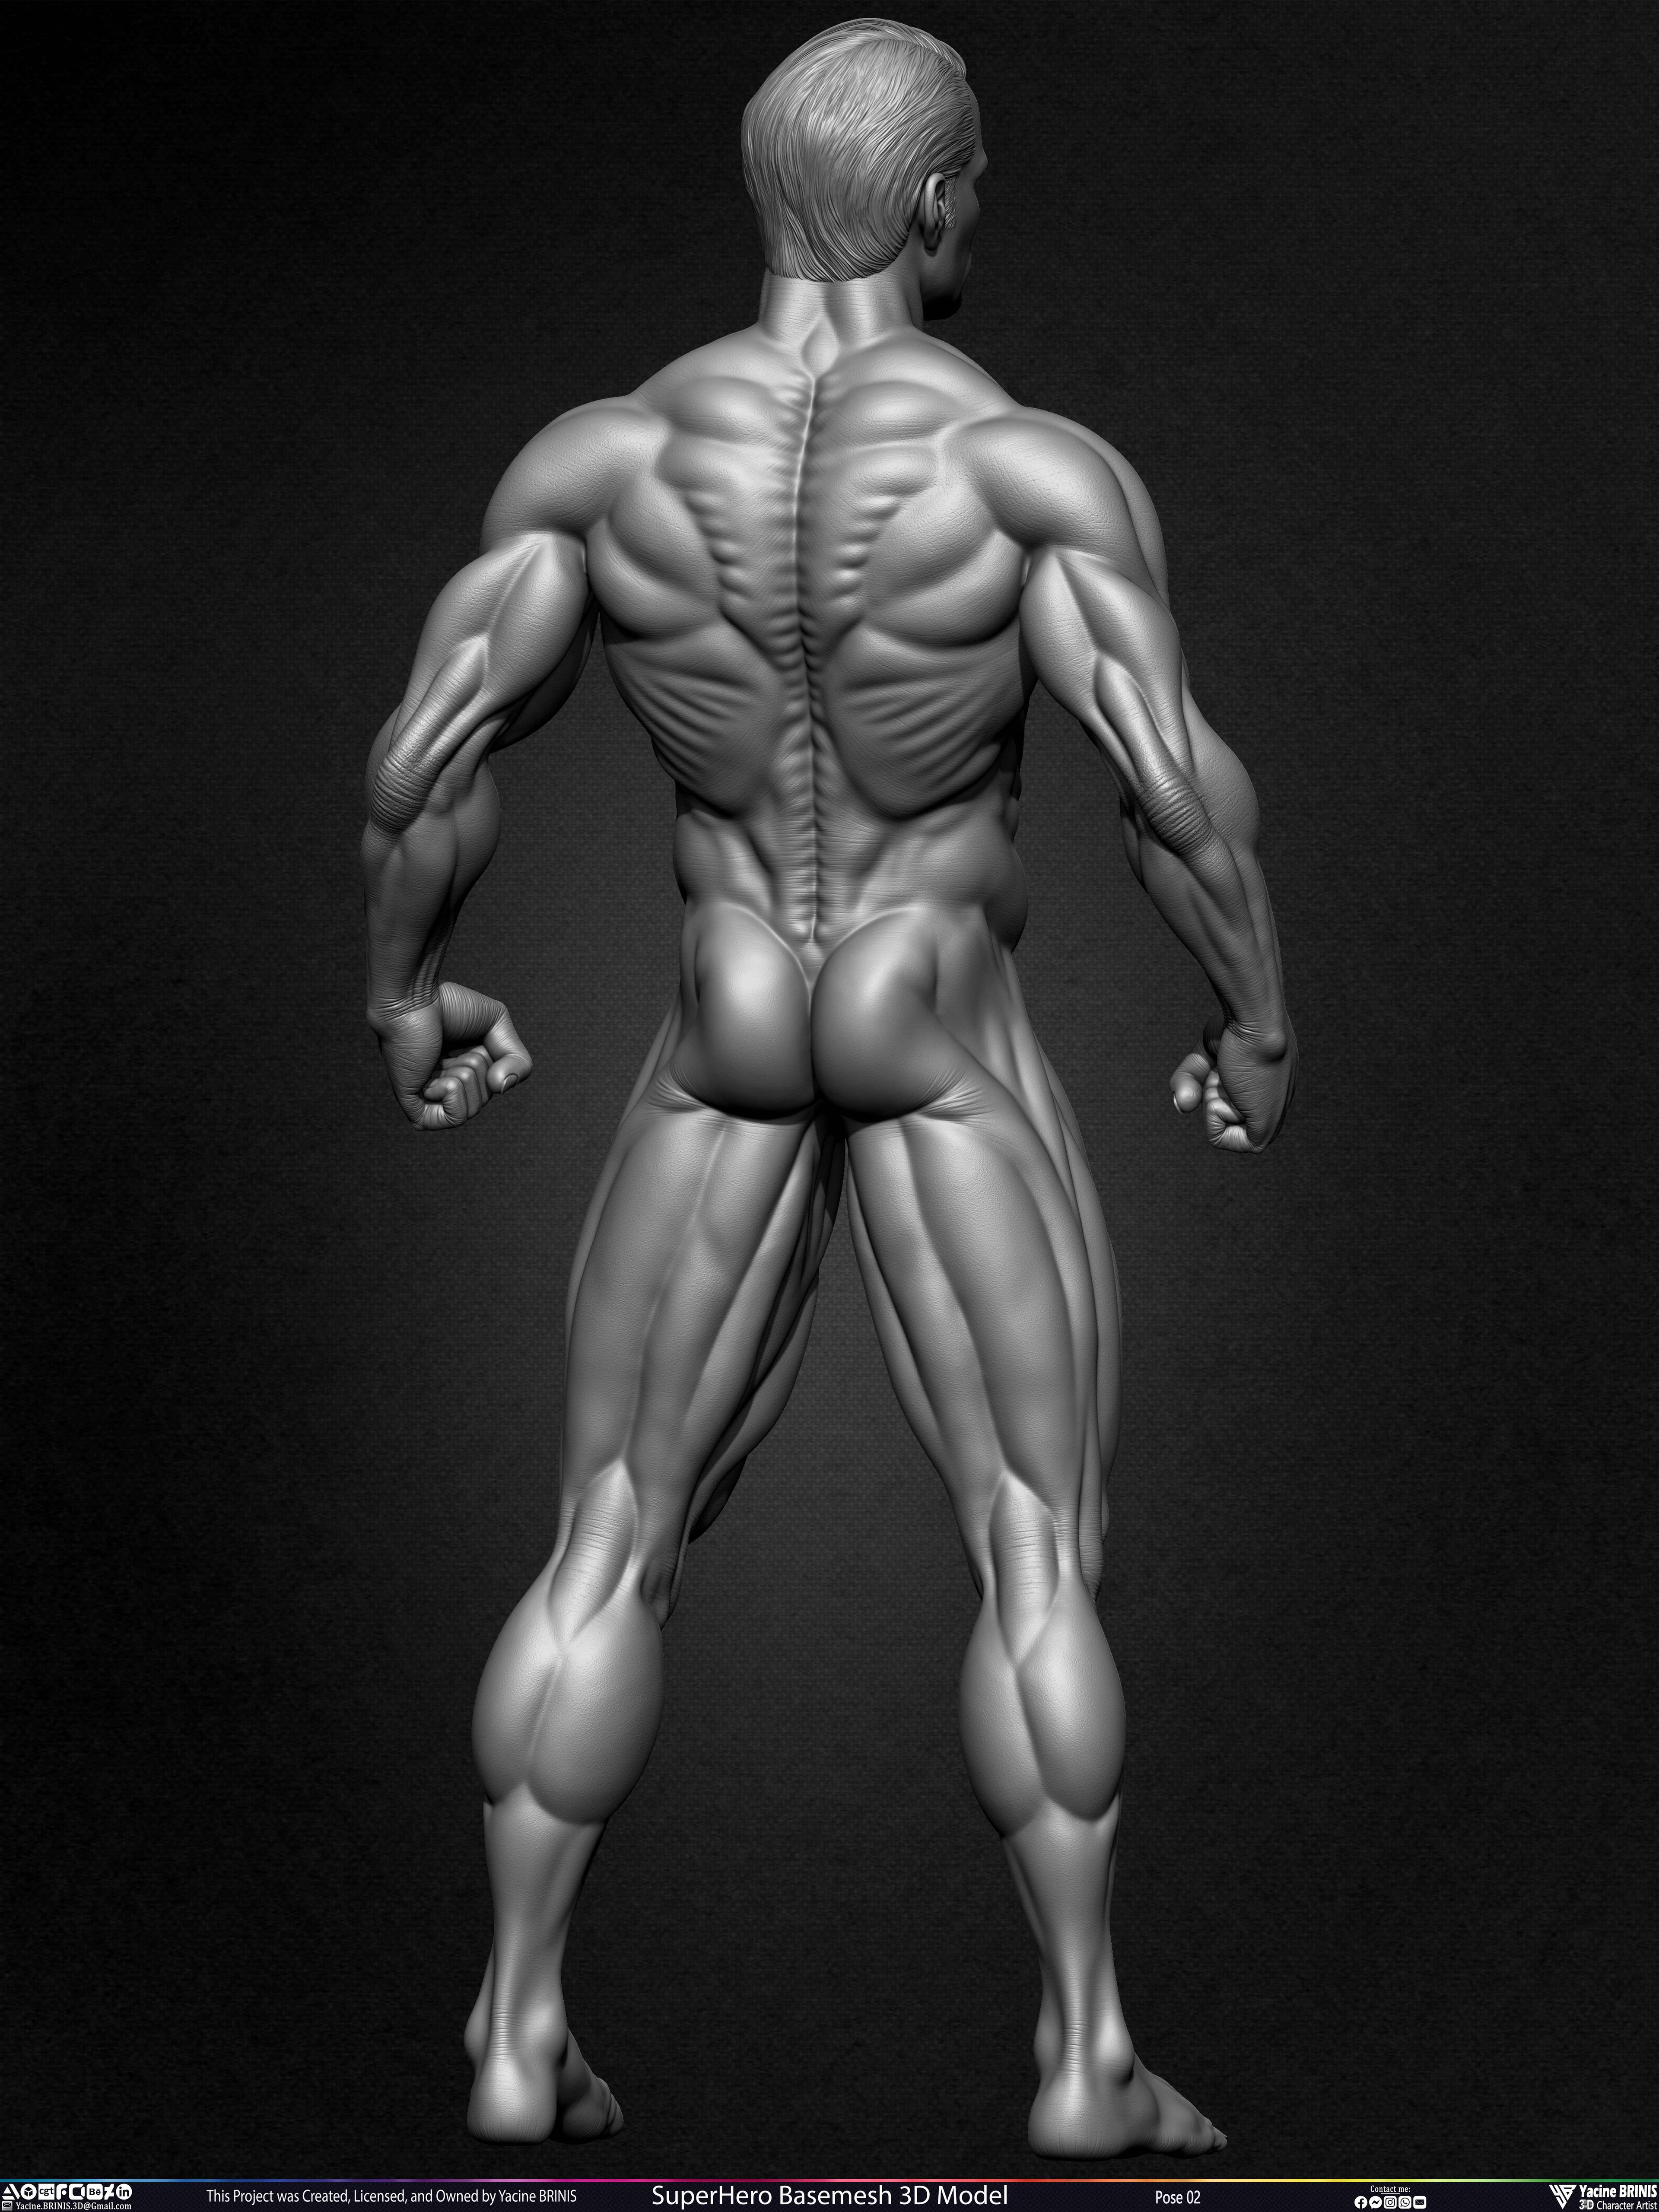 Super-Hero Basemesh 3D Model - Henry Cavill- Man of Steel - Superman - Pose 02 Sculpted by Yacine BRINIS Set 008